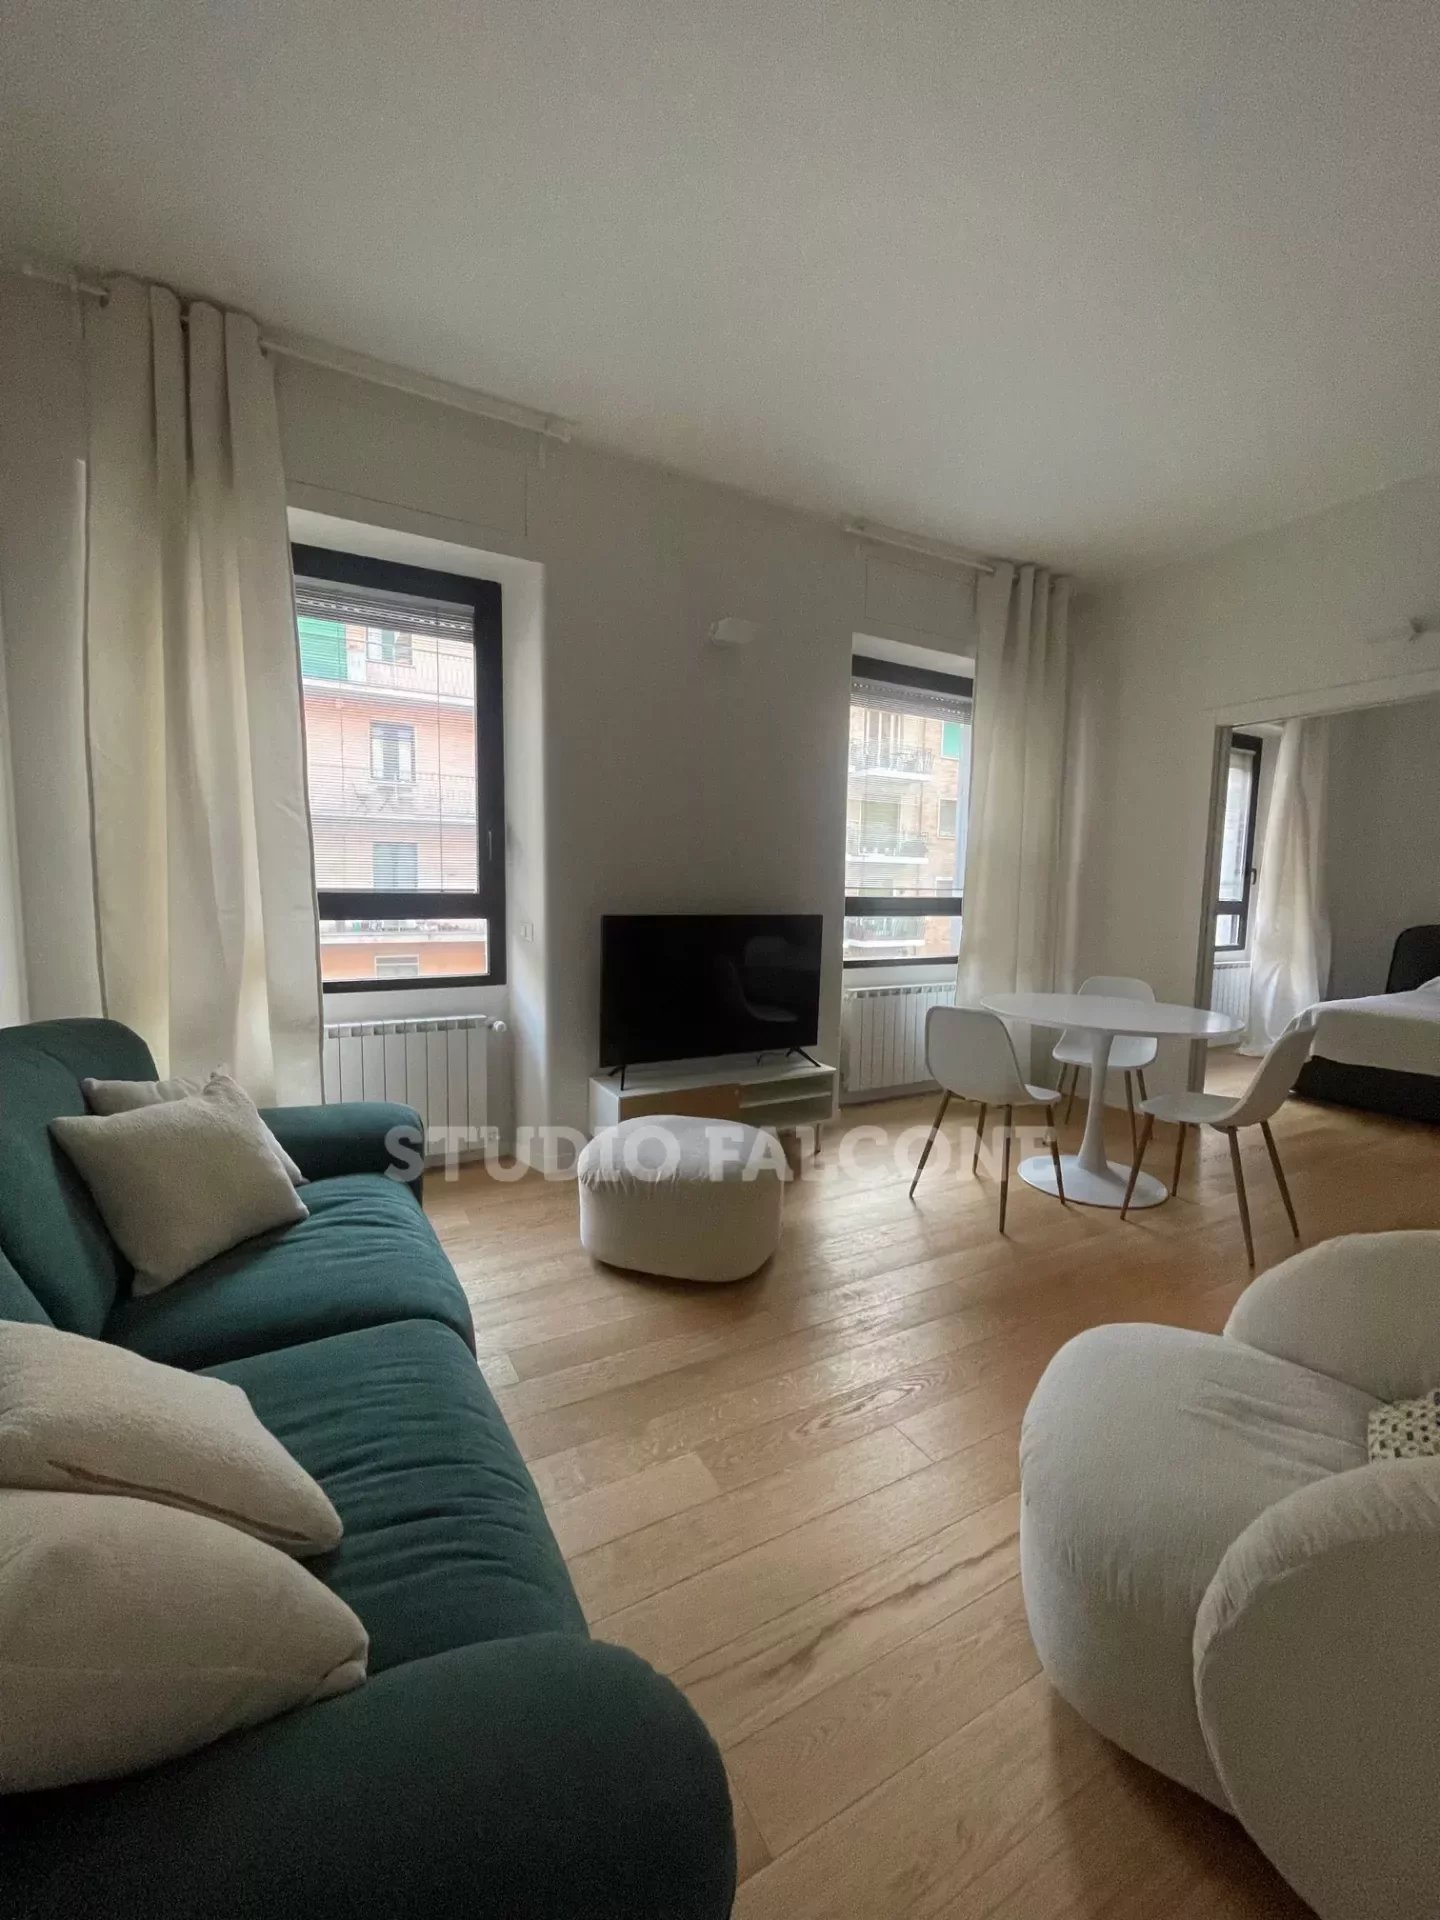 Rental Apartment - Milano Solari - Italy